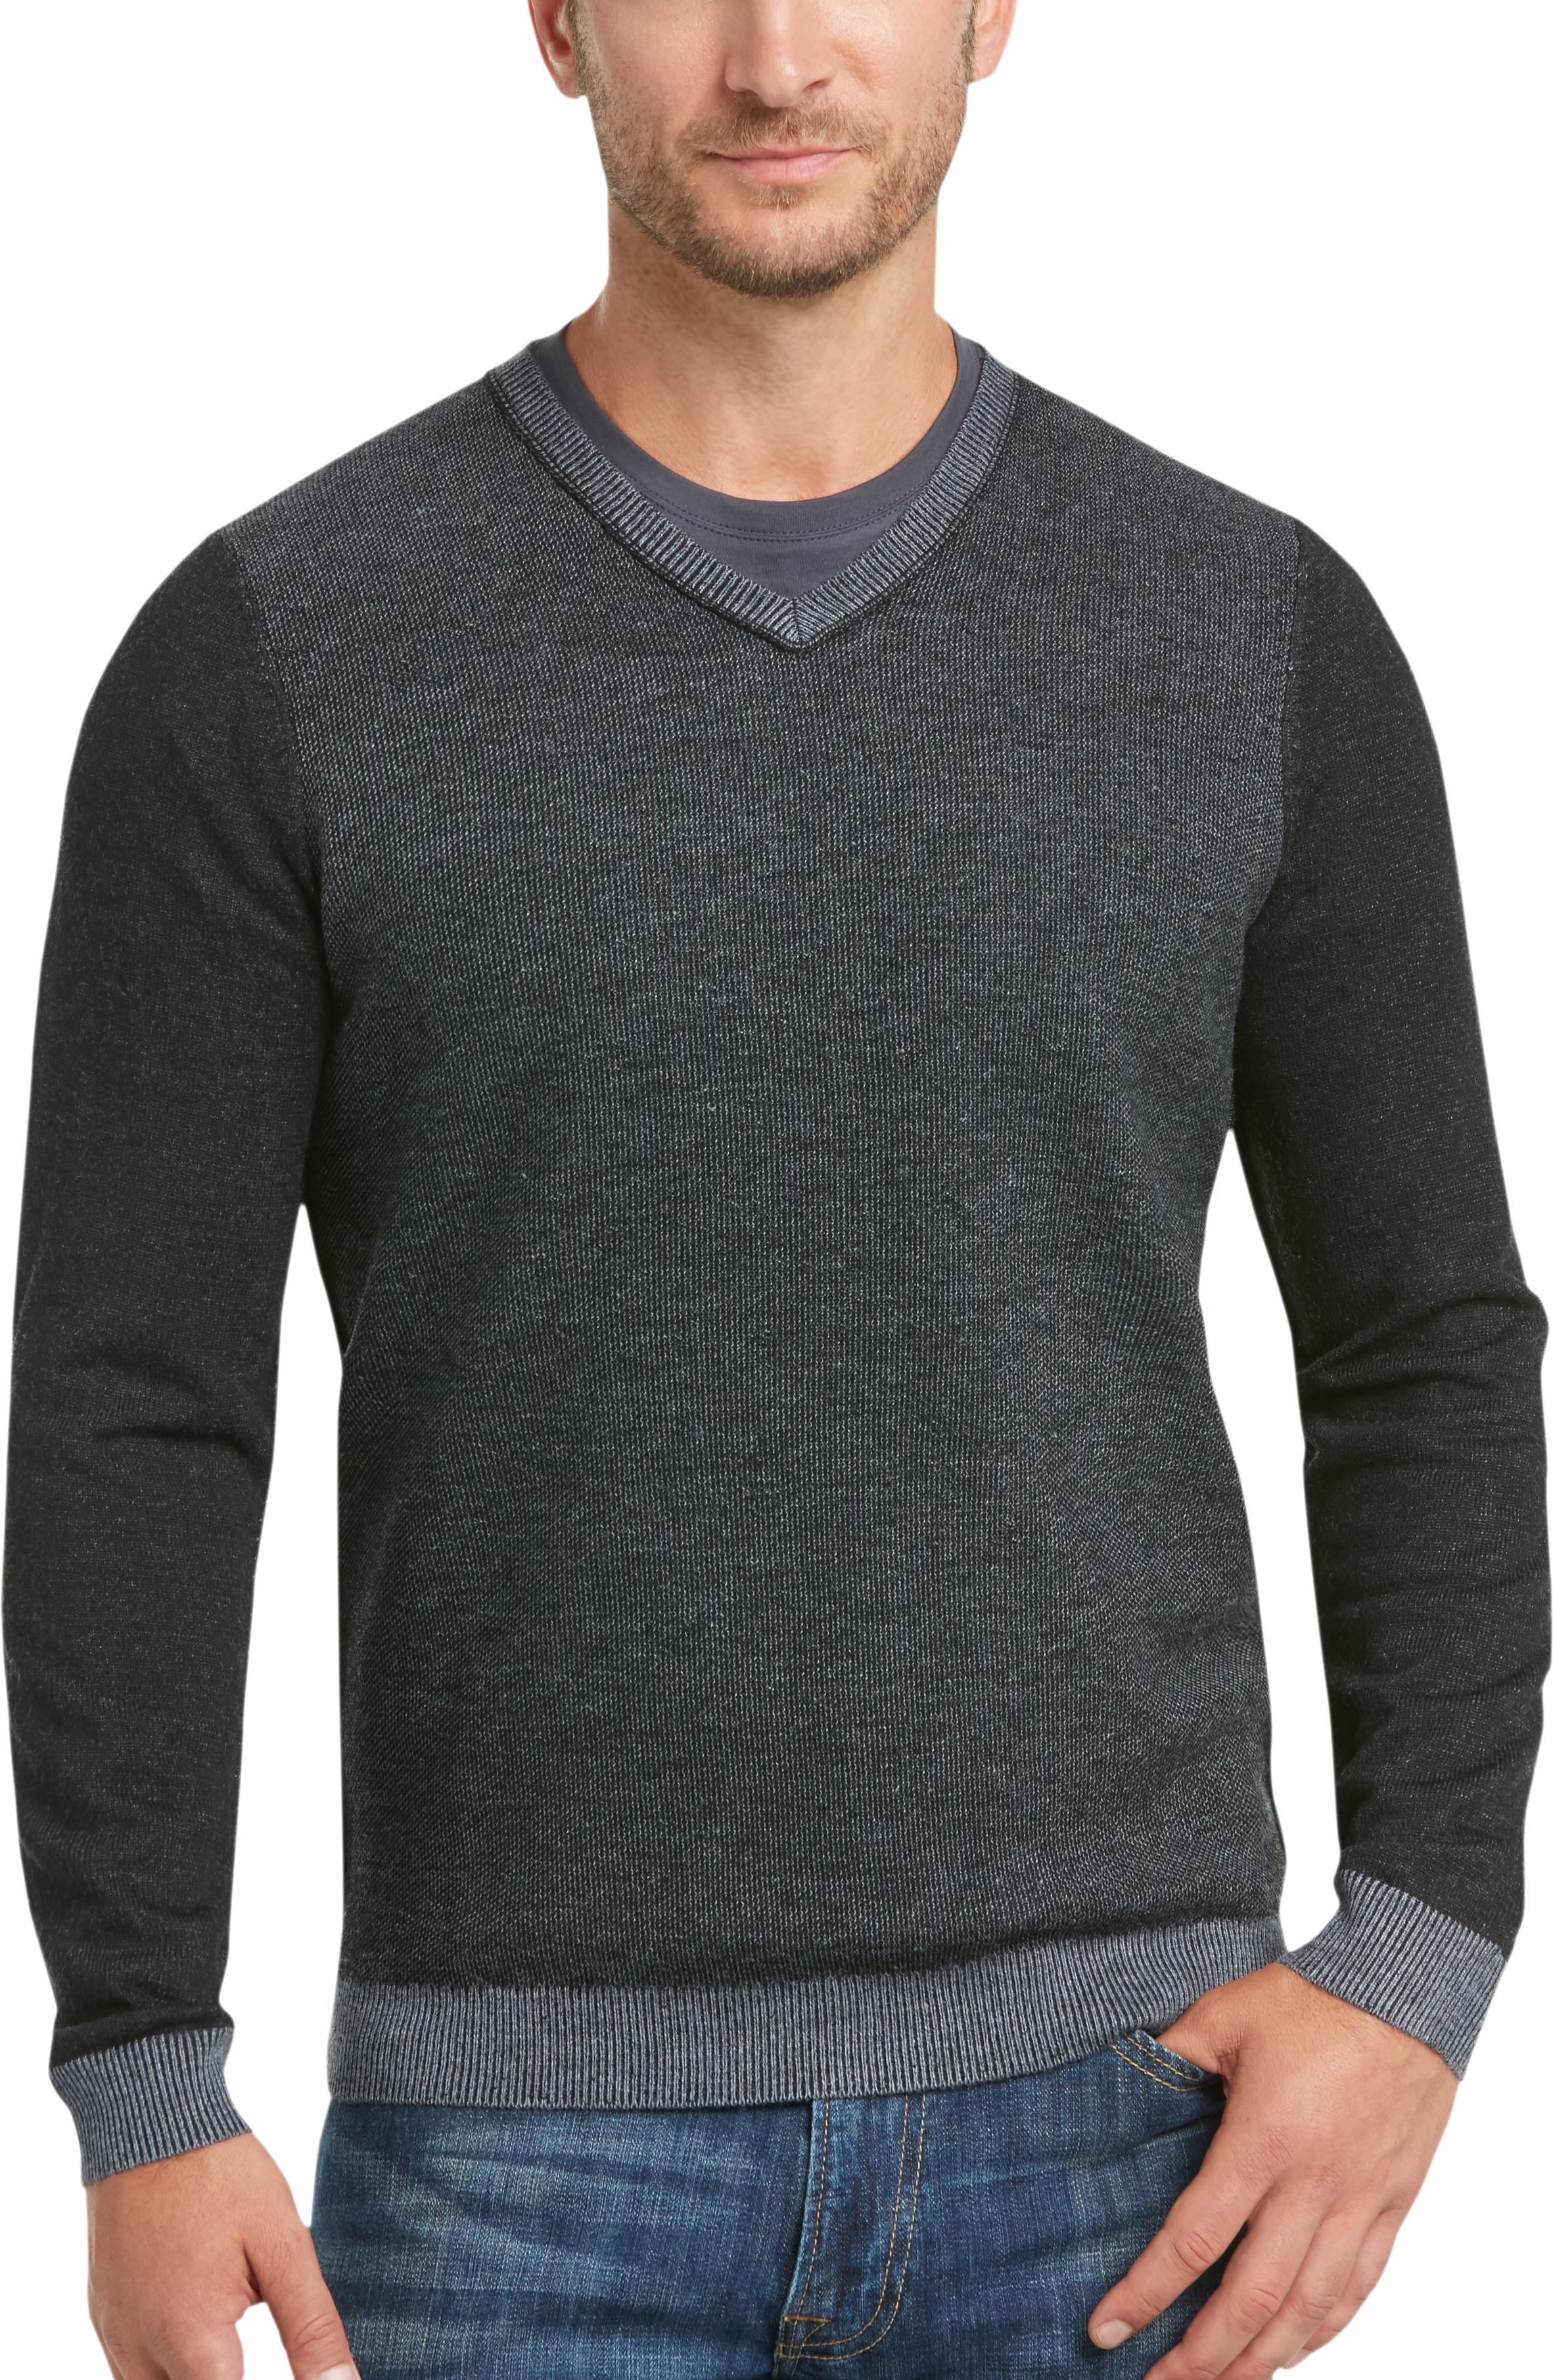 JOE Joseph Abboud Black Slim Fit V-Neck Sweater - Men's Slim Fit | Men ...